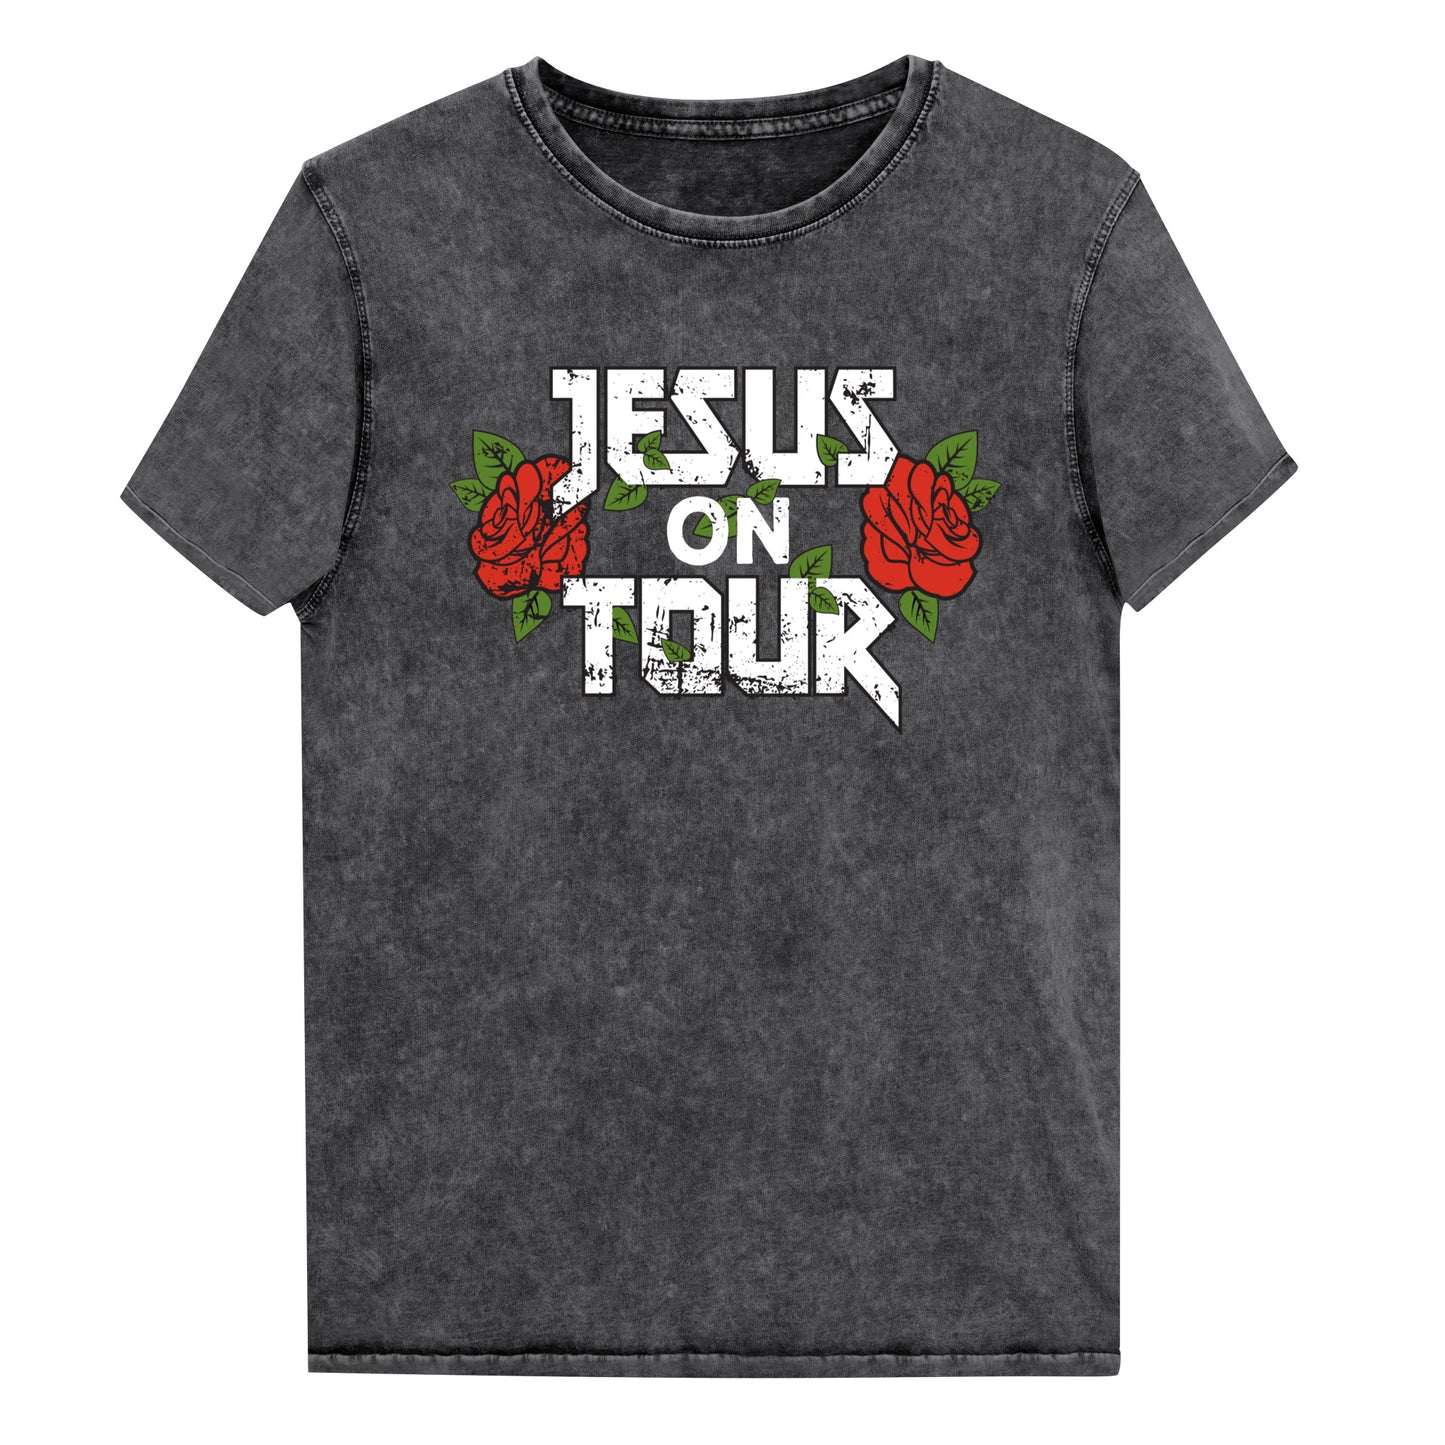 JESUS ON TOUR